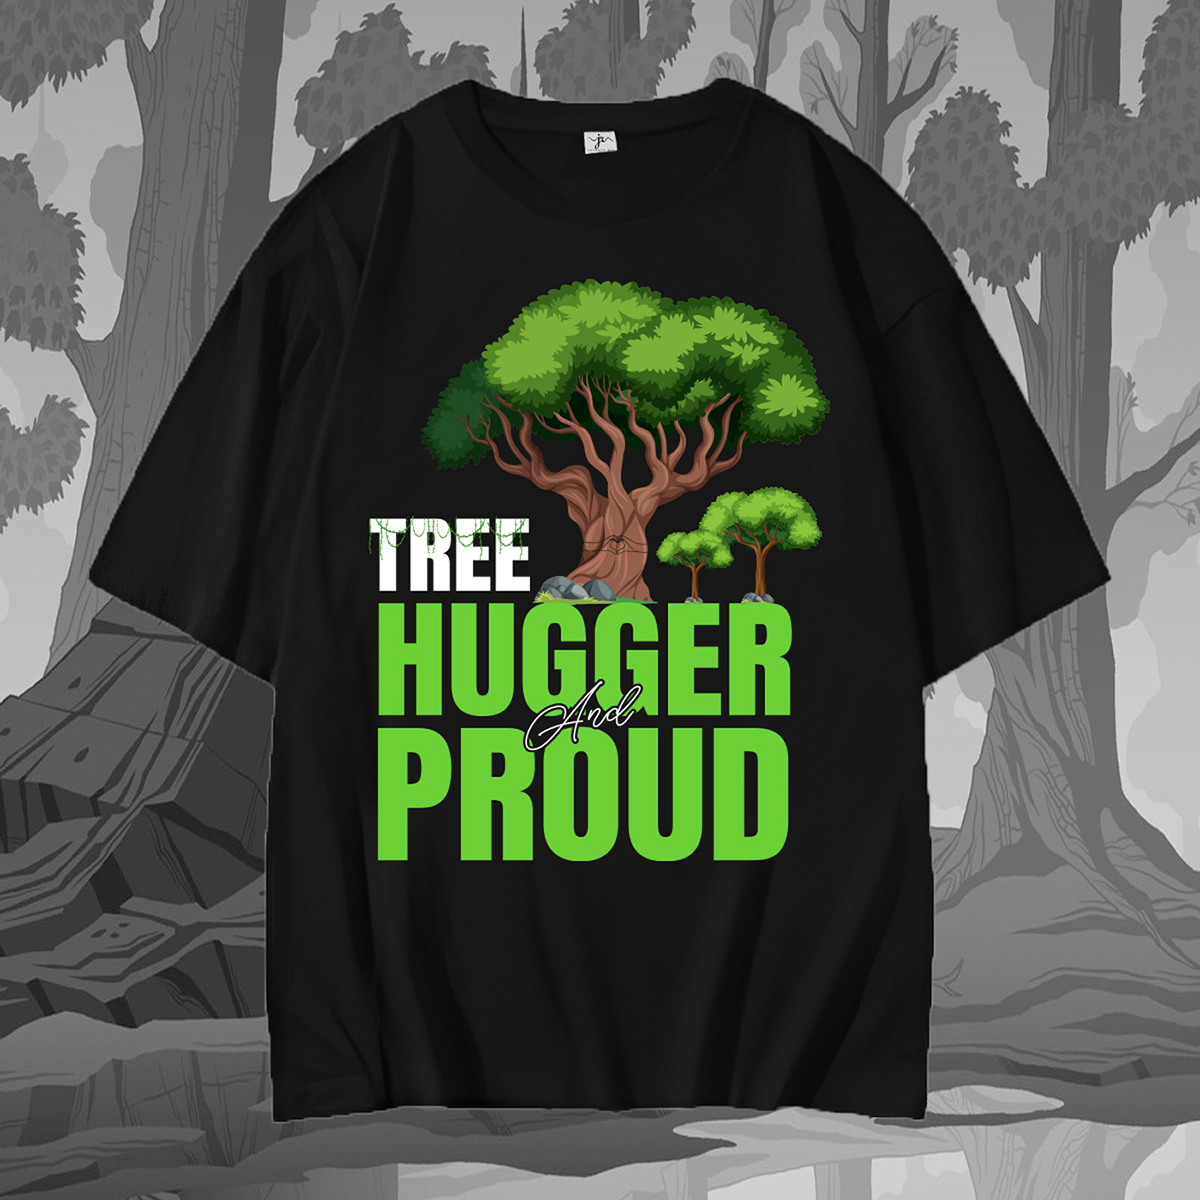 Arbor day t-shirt design